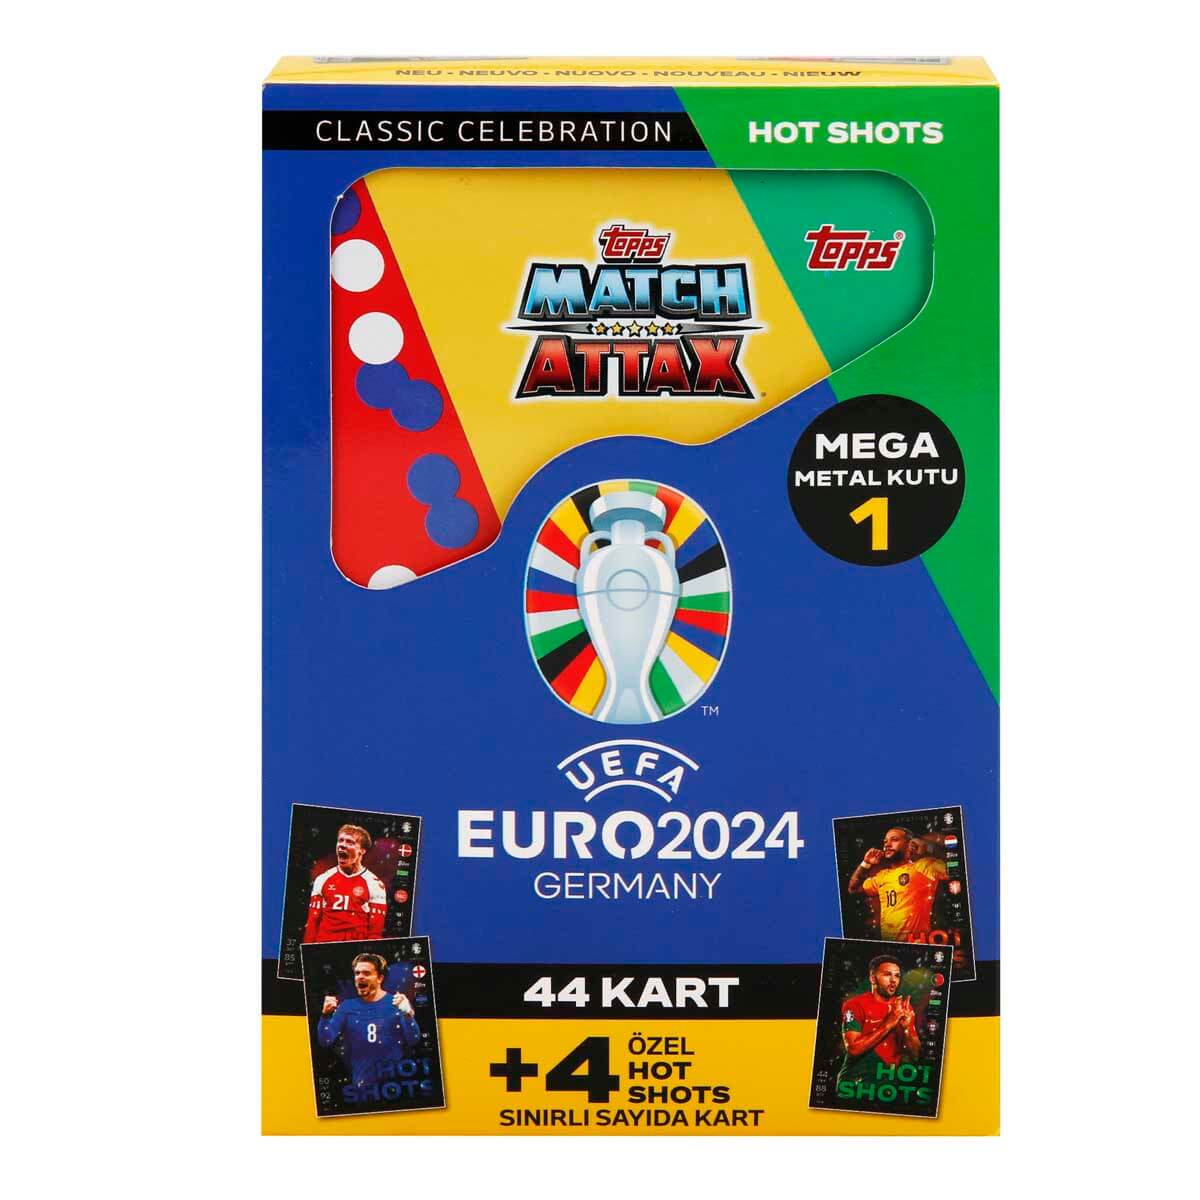 Cartonase cu jucatori de fotbal in cutie metalica, Topps, UEFA EURO 2024, 48 buc